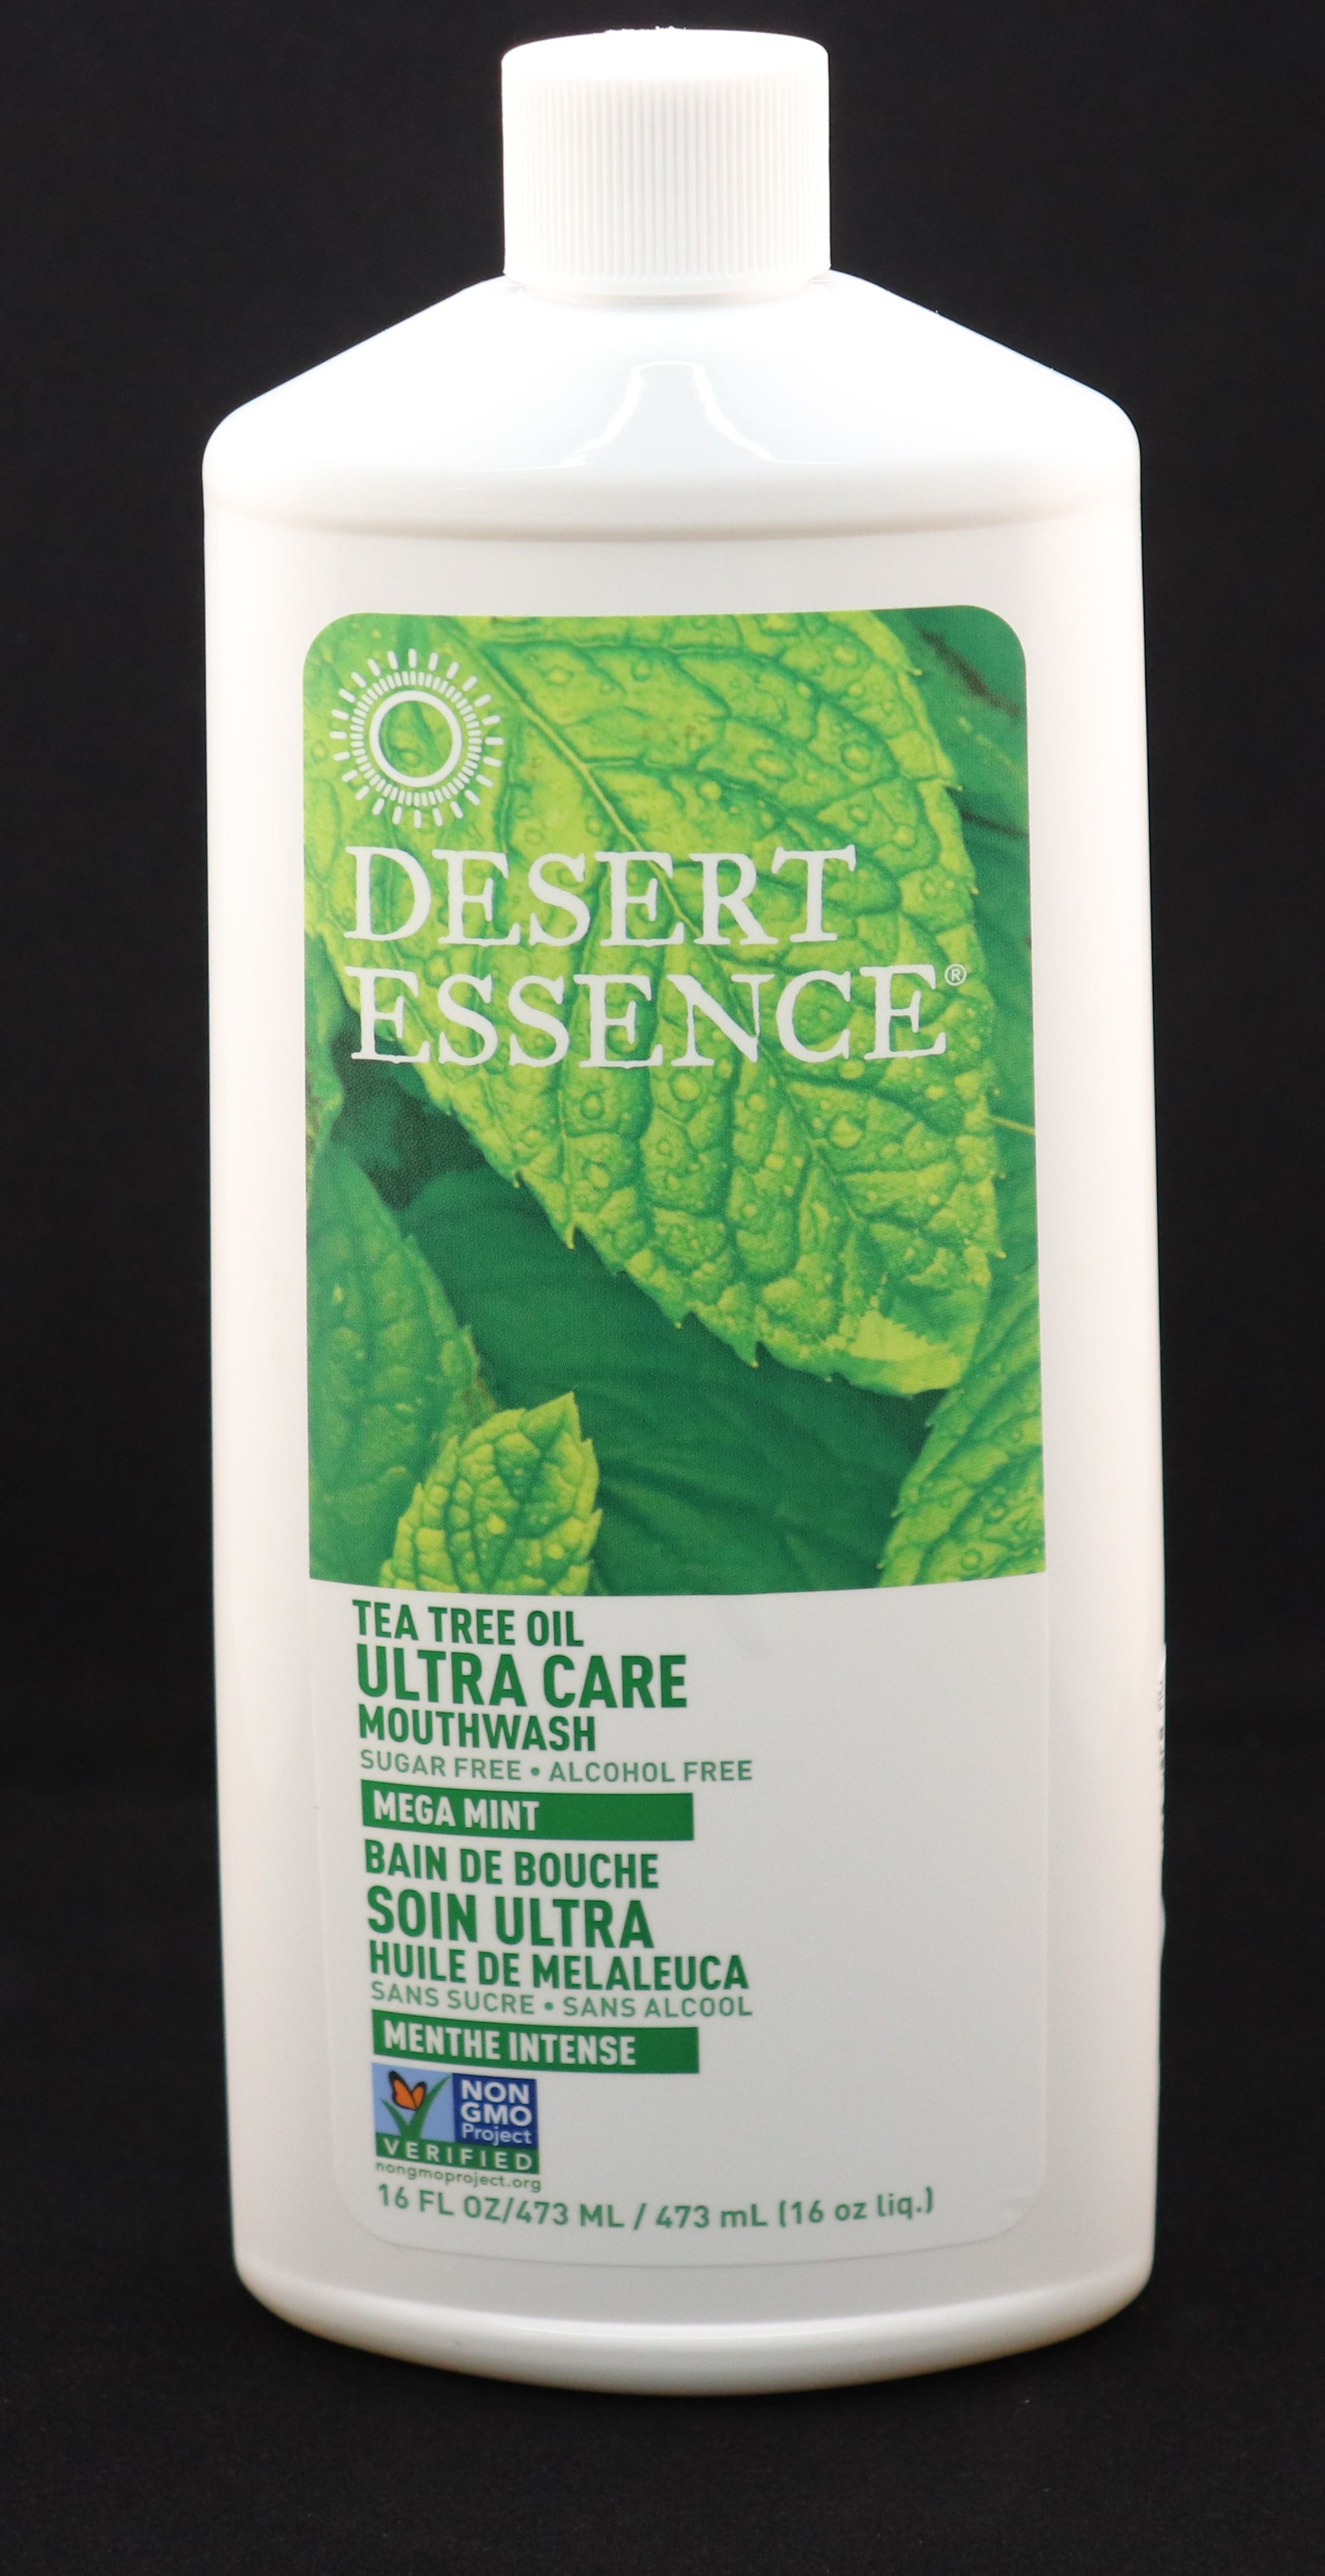 Ultra Care Tea Tree Oil Mouthwash